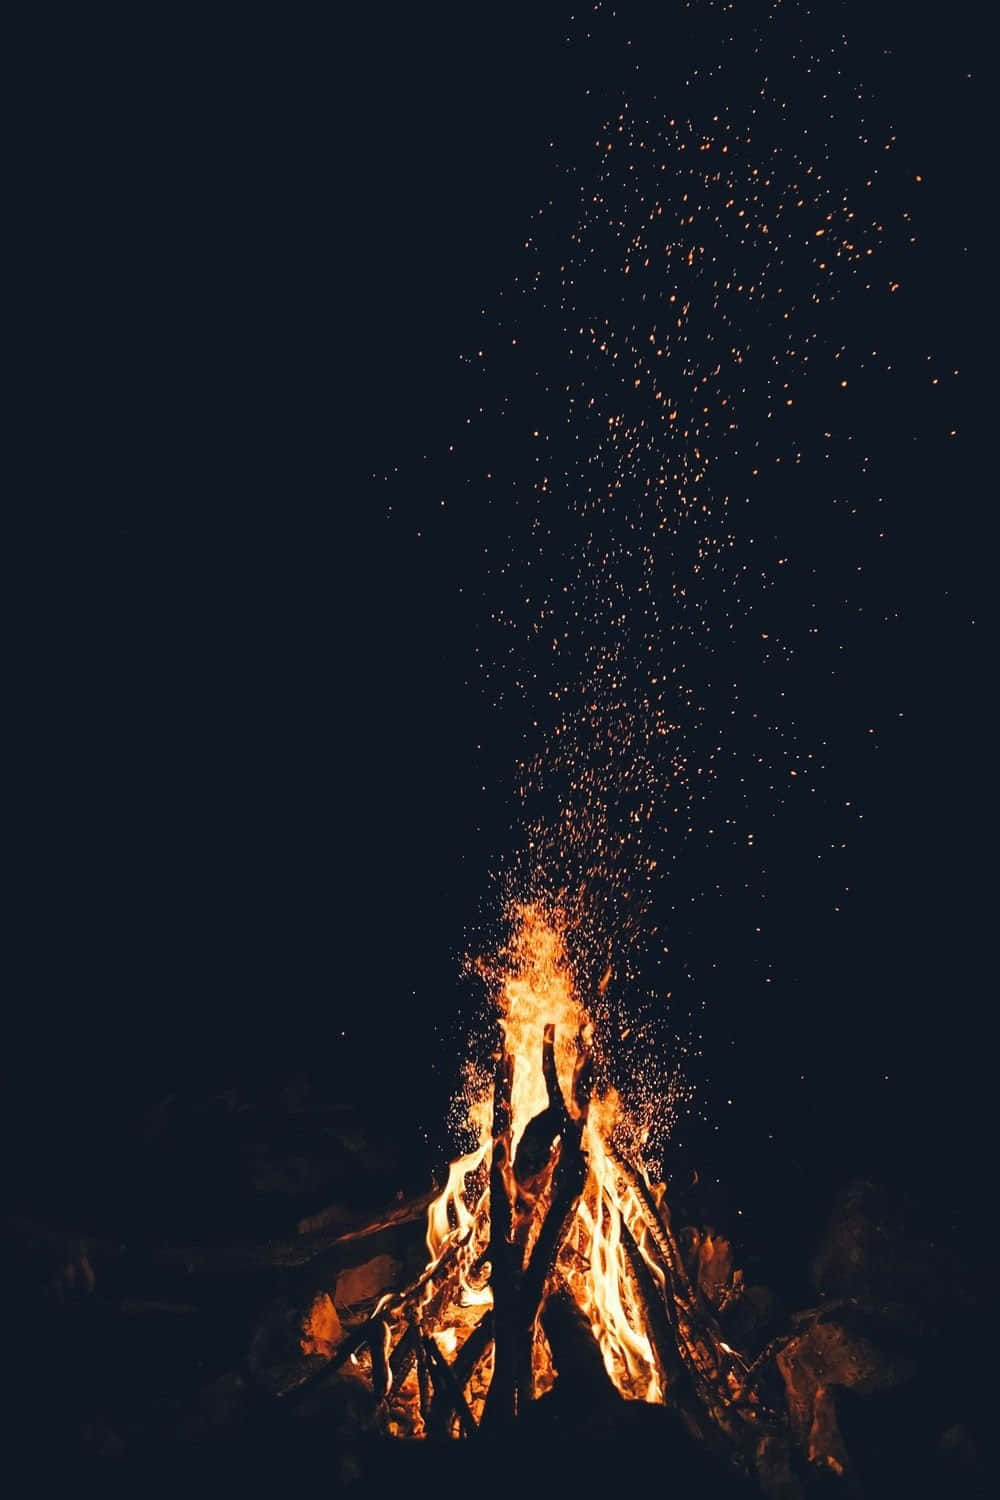 Caption: Warm Campfire Night